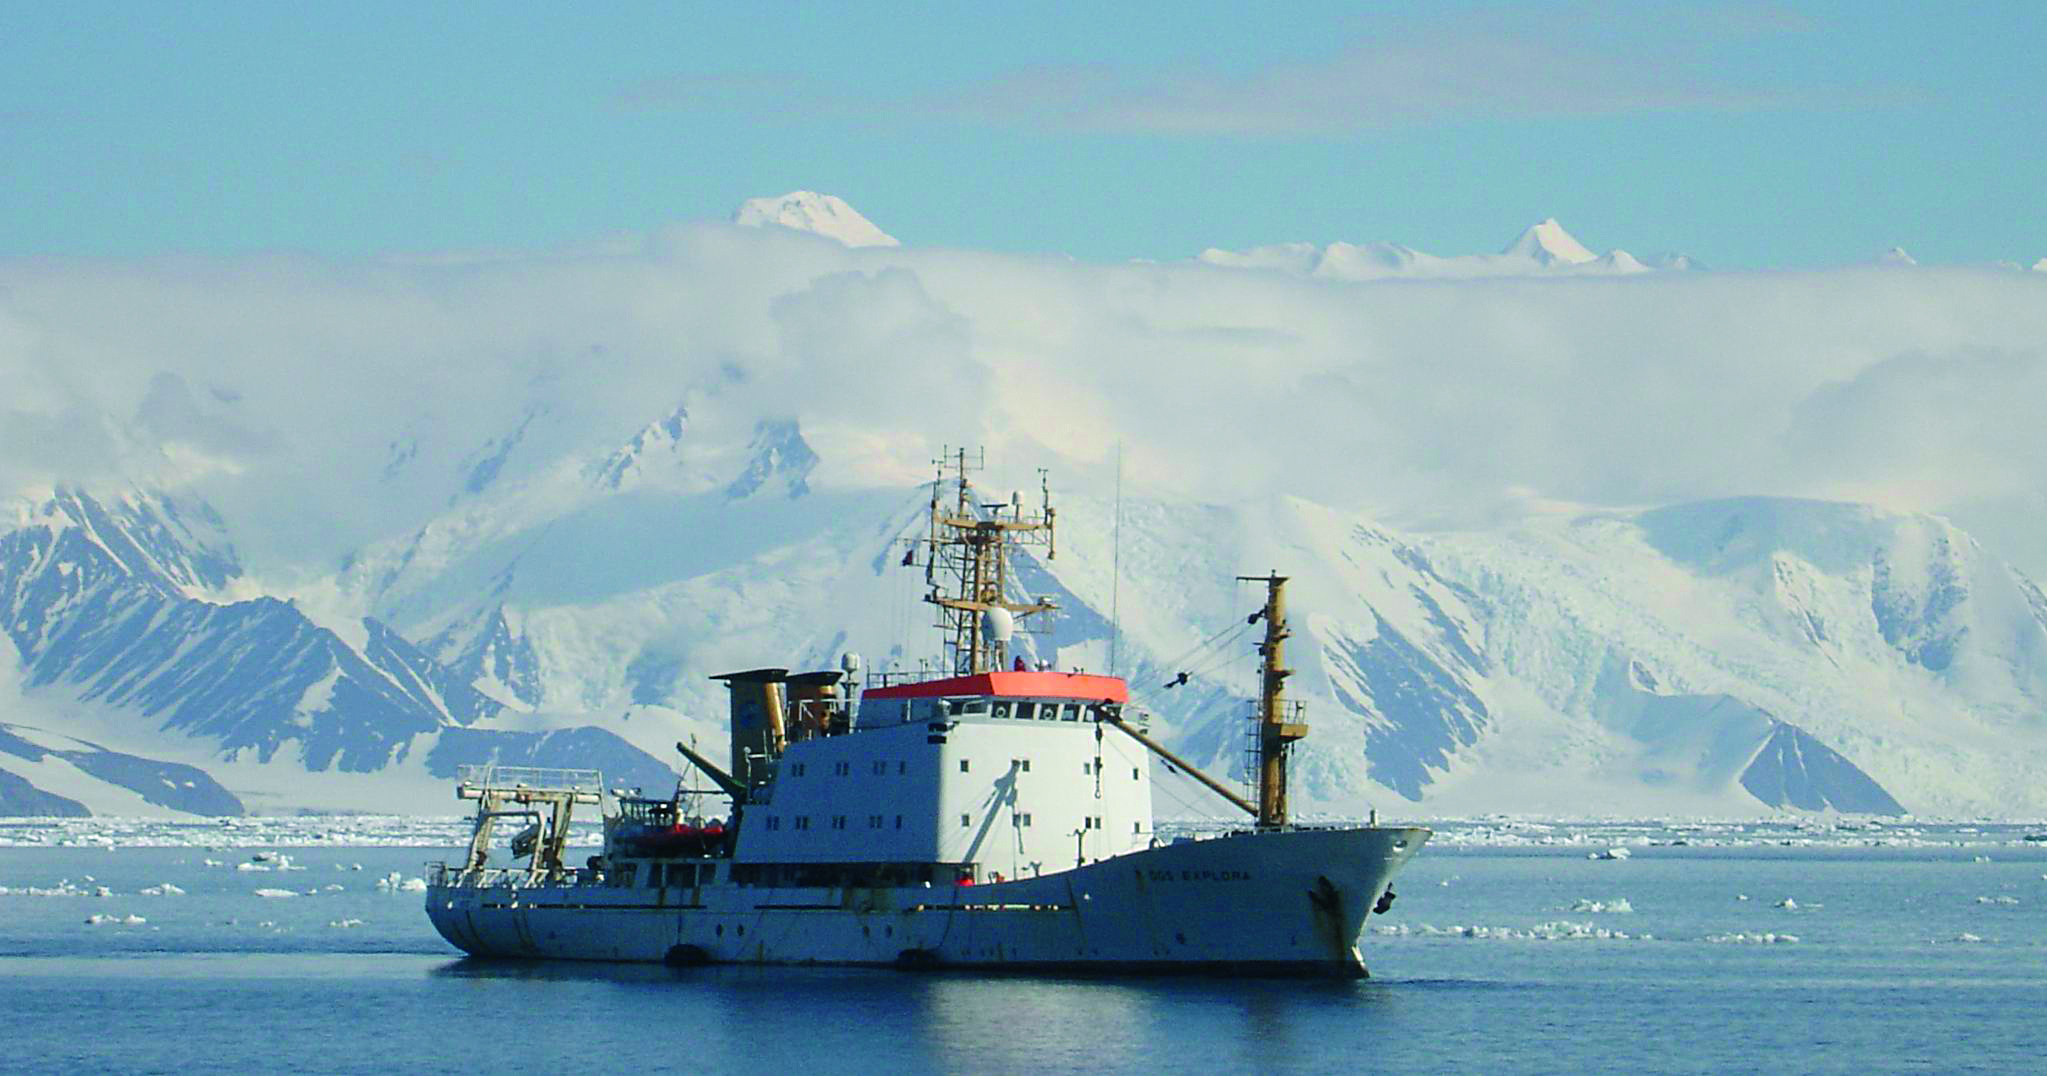 OGS Explora in Antartide